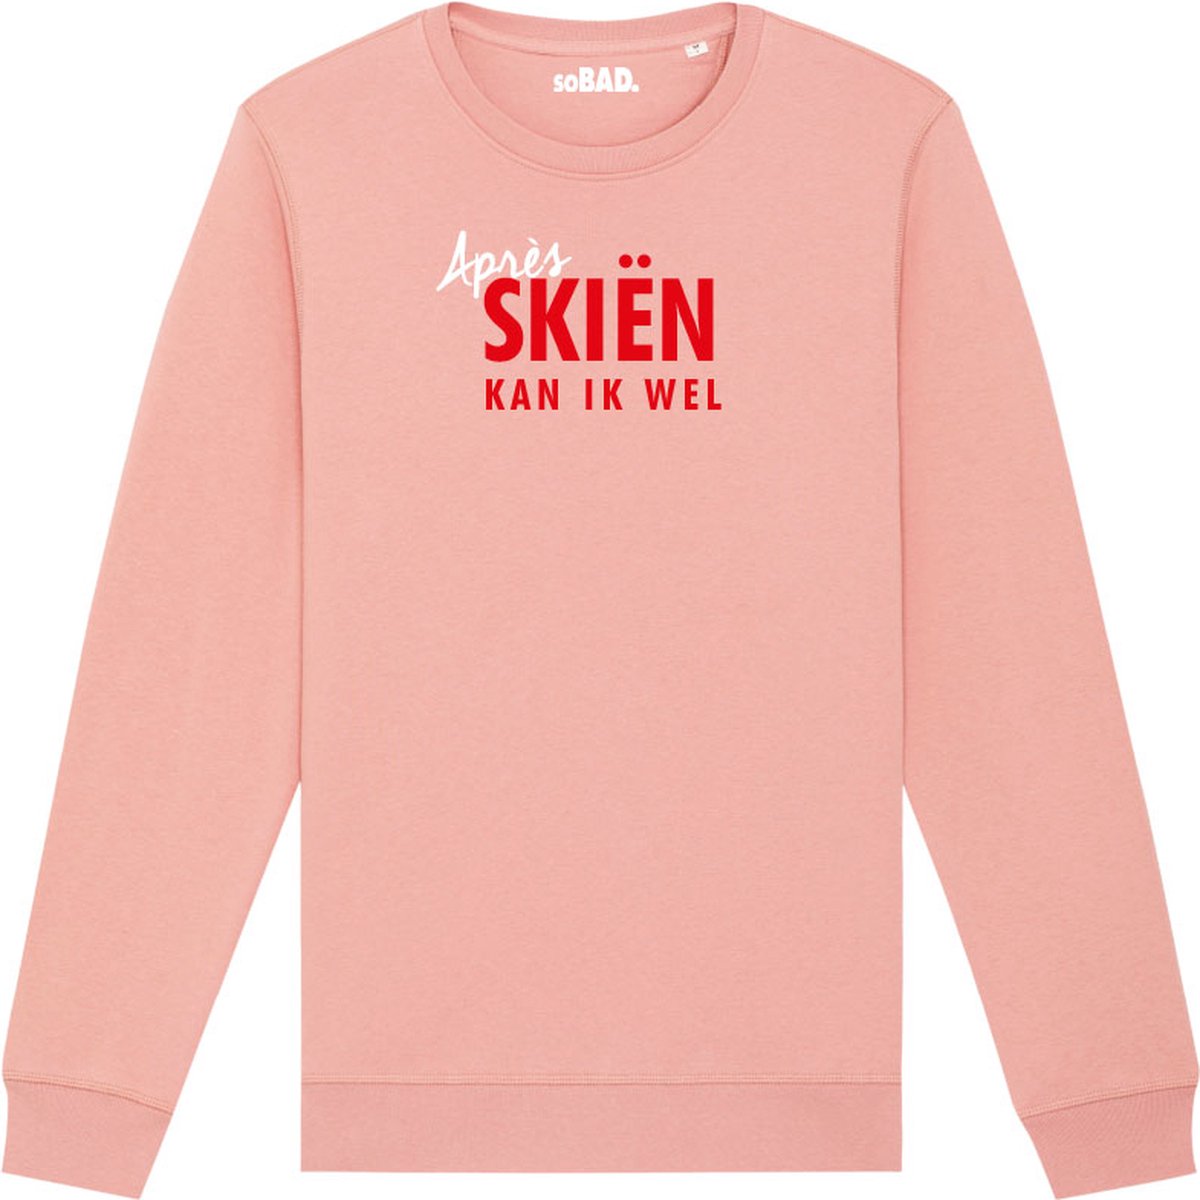 Wintersport sweater canyon pink XXL - Après skien kan ik wel - soBAD. | Foute apres ski outfit | kleding | verkleedkleren | wintersporttruien | wintersport dames en heren